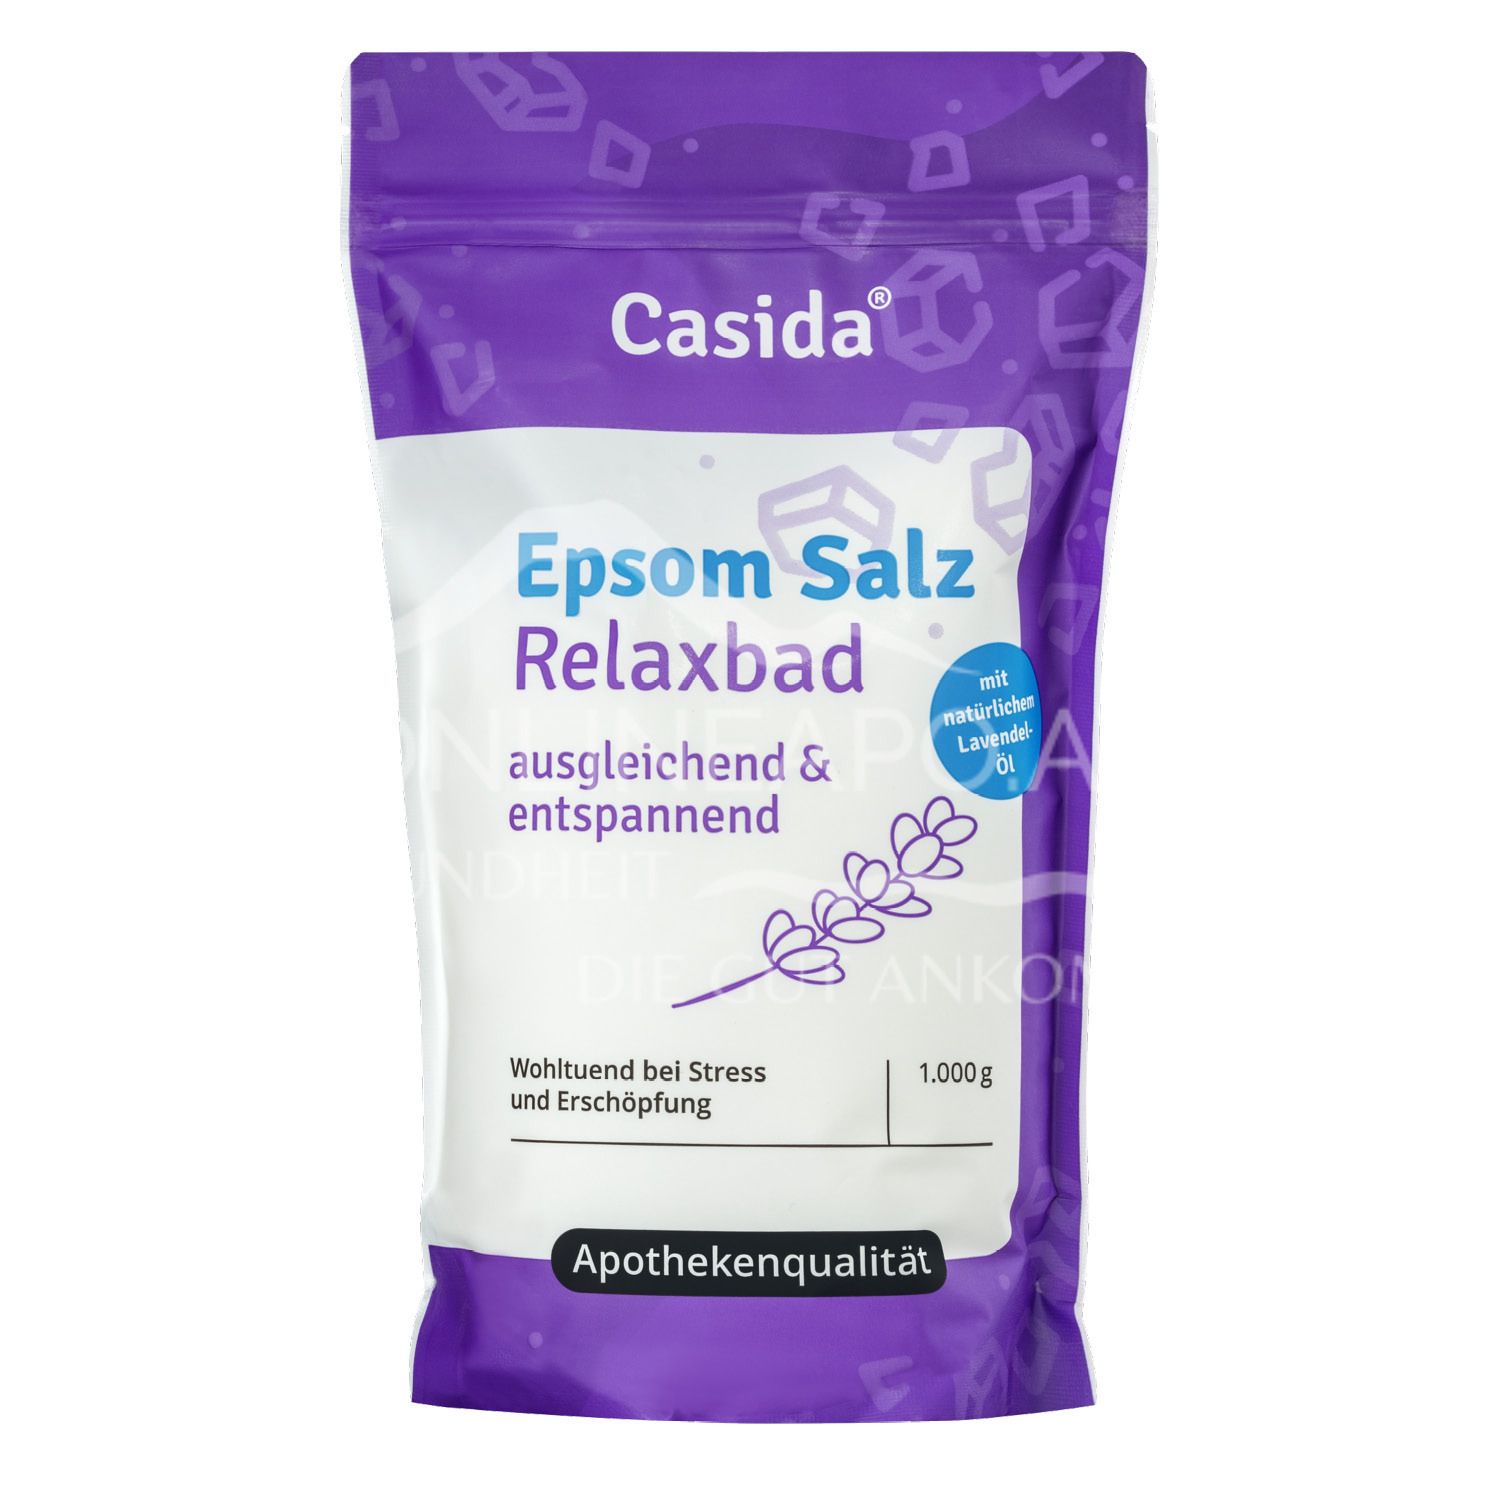 Casida Epsom Salz Relaxbad mit Lavendel